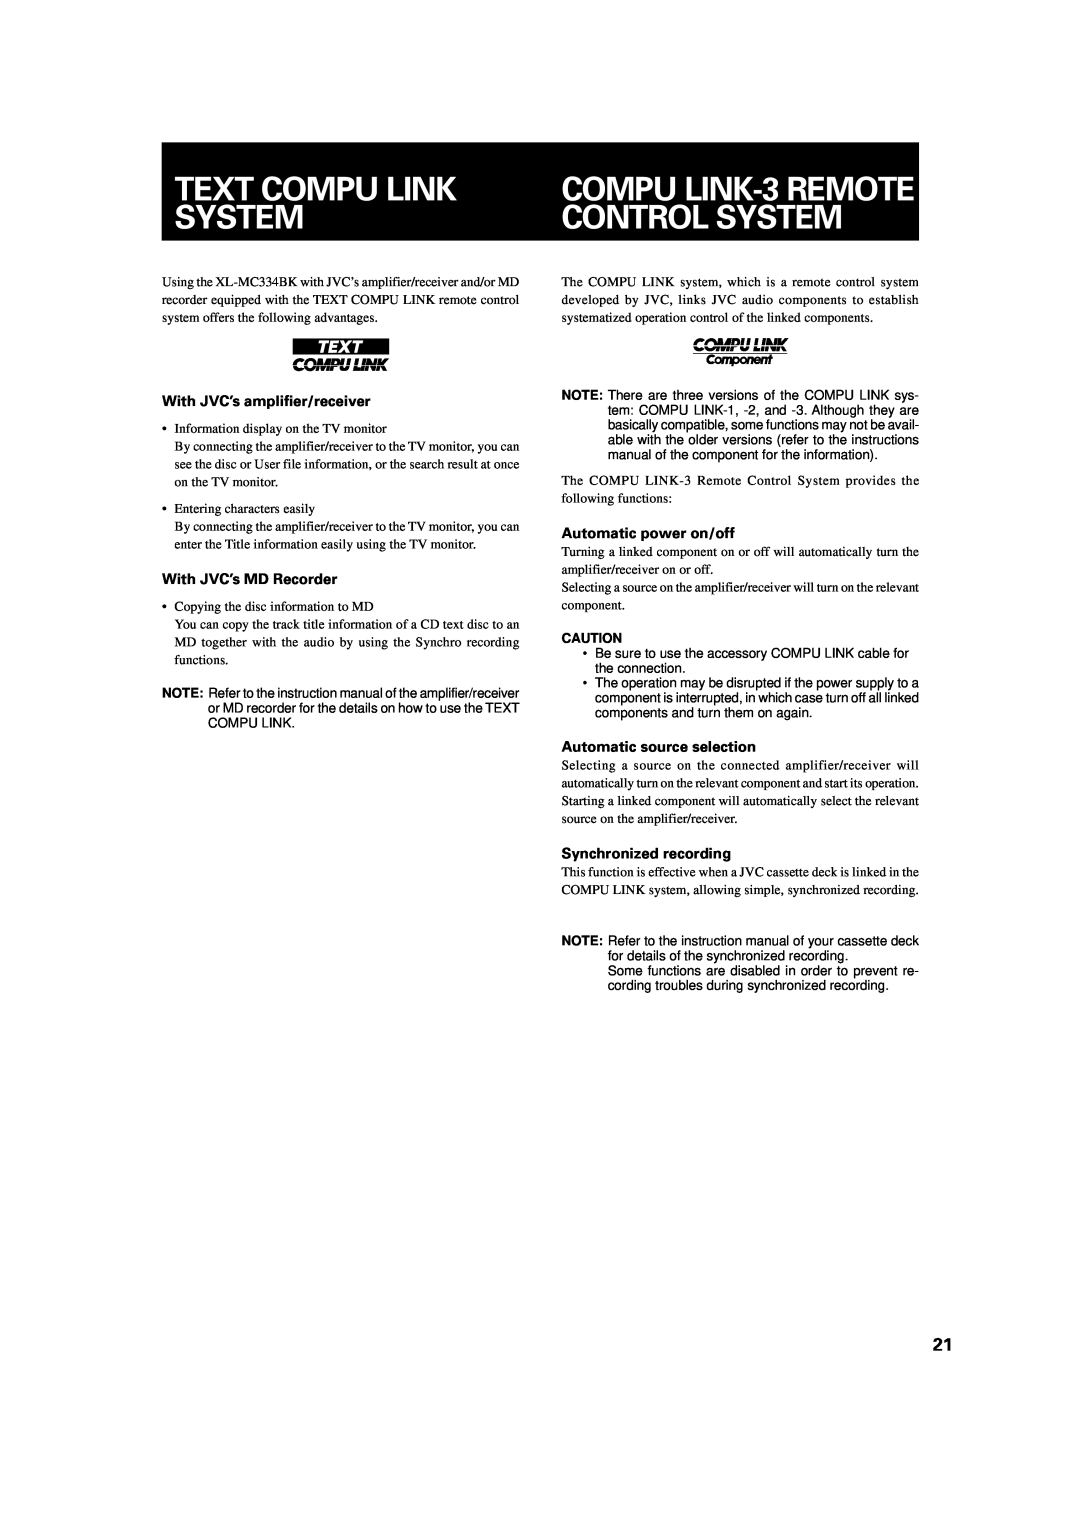 JVC XL-MC334BK manual Text Compu Link, Control System, COMPU LINK-3REMOTE 